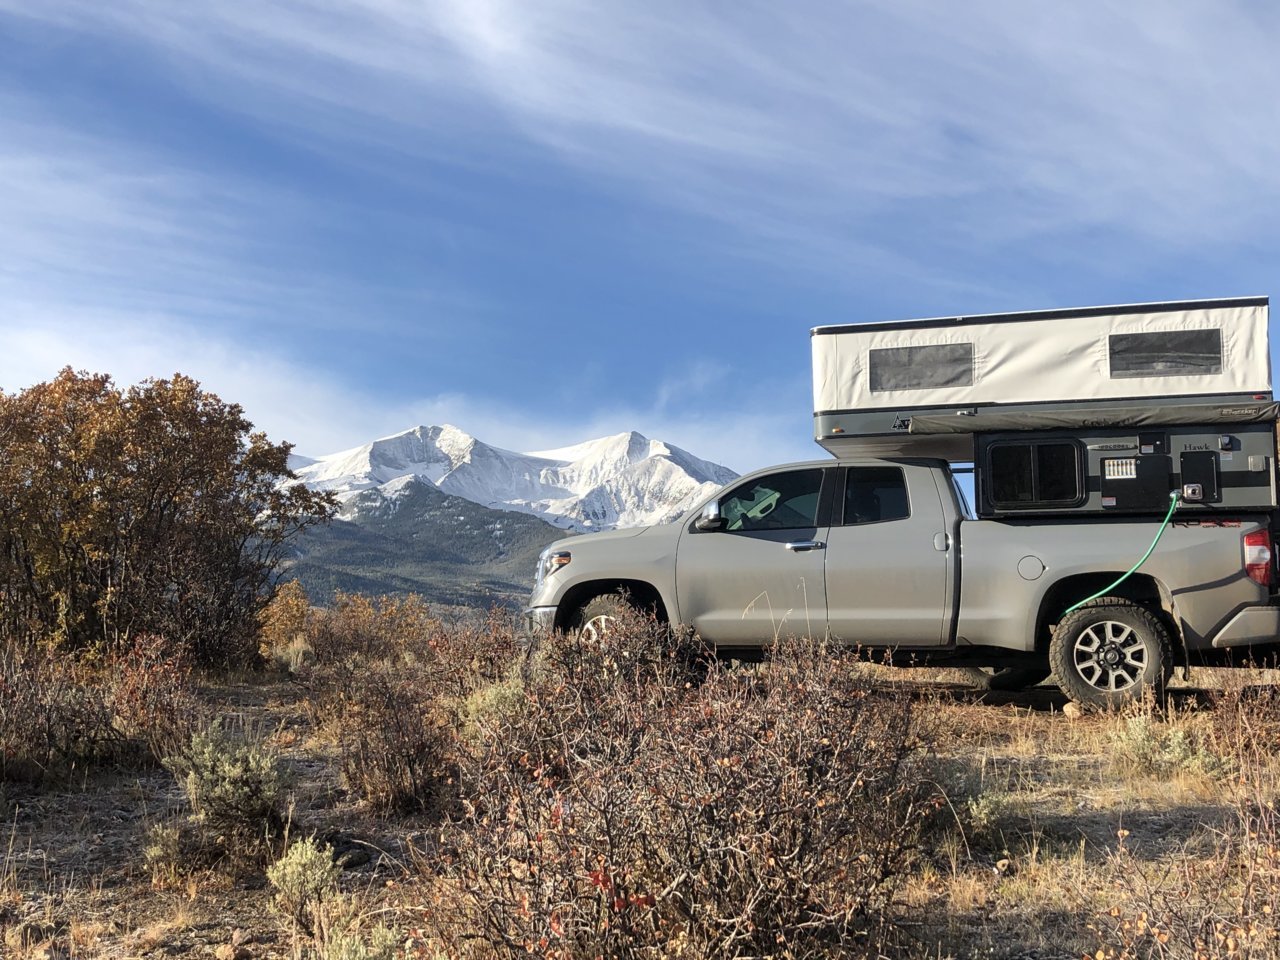 Camper | Toyota Tundra Forum